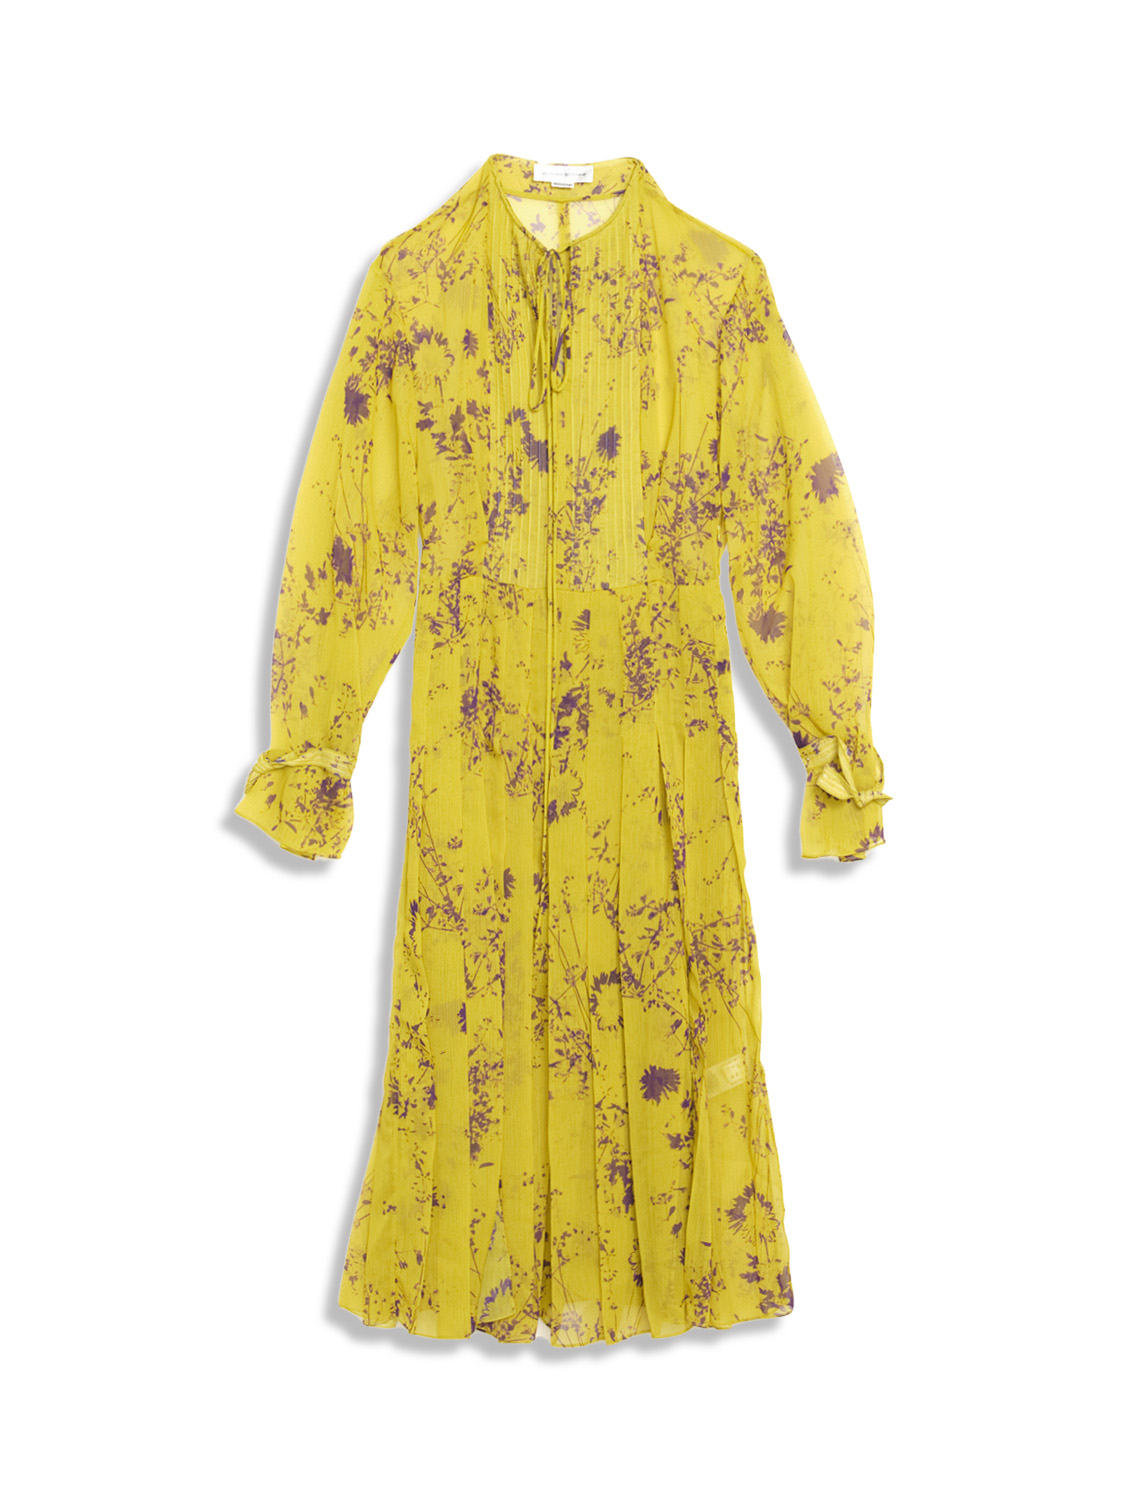 Pleated Tea Dress - Midi dress with floral print design